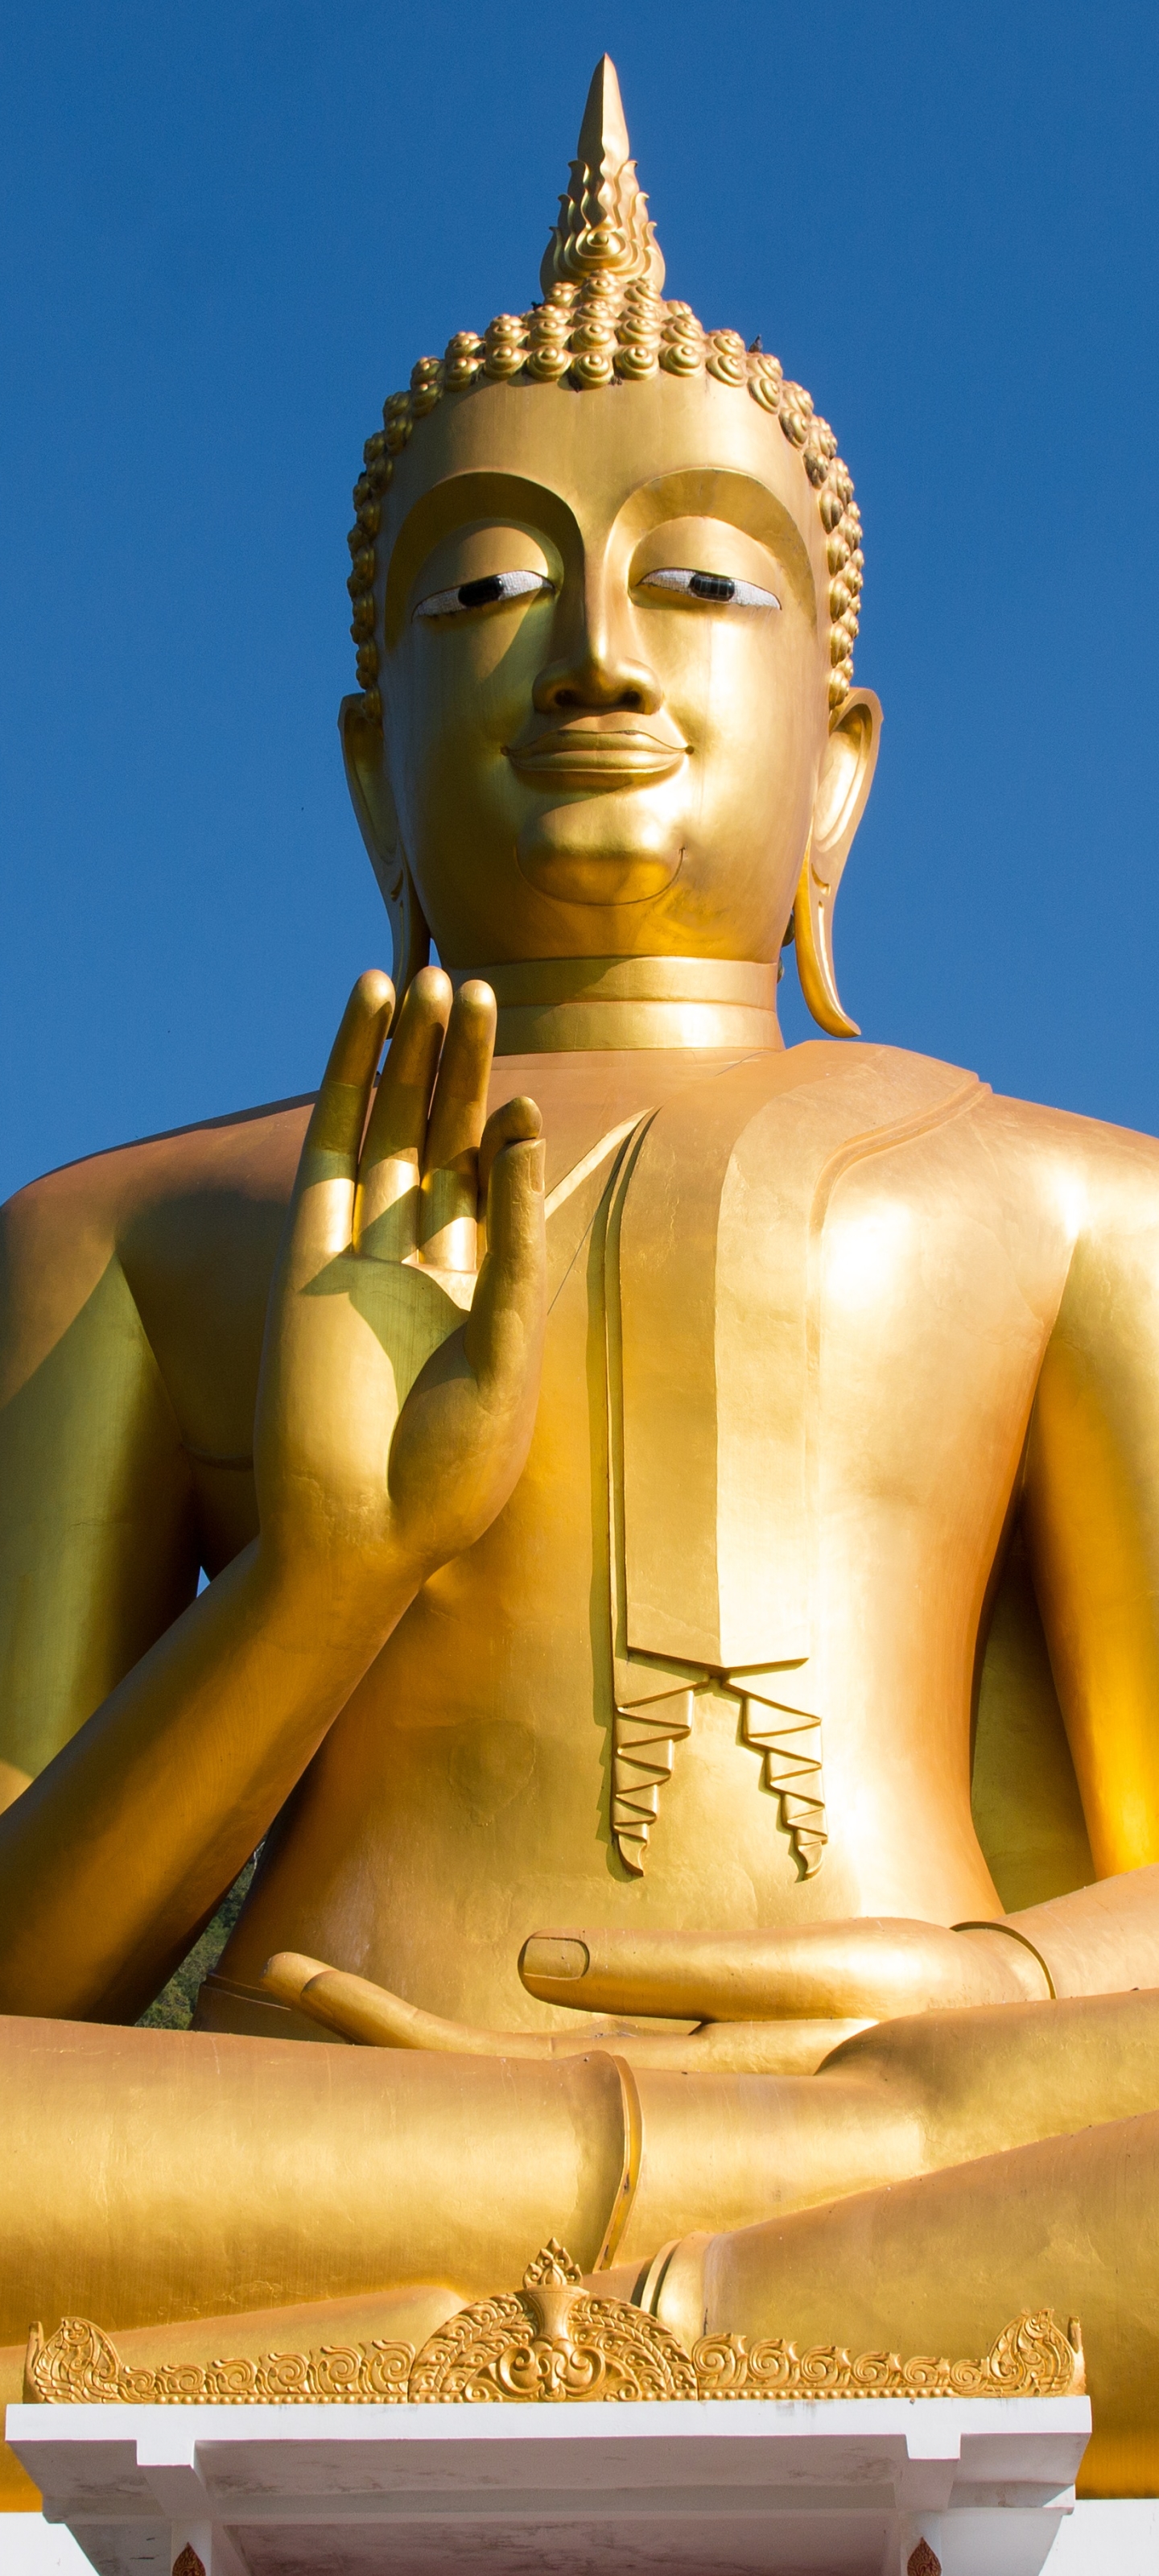 Gold Colored Buddha Statue by Somchai Kongkamsri